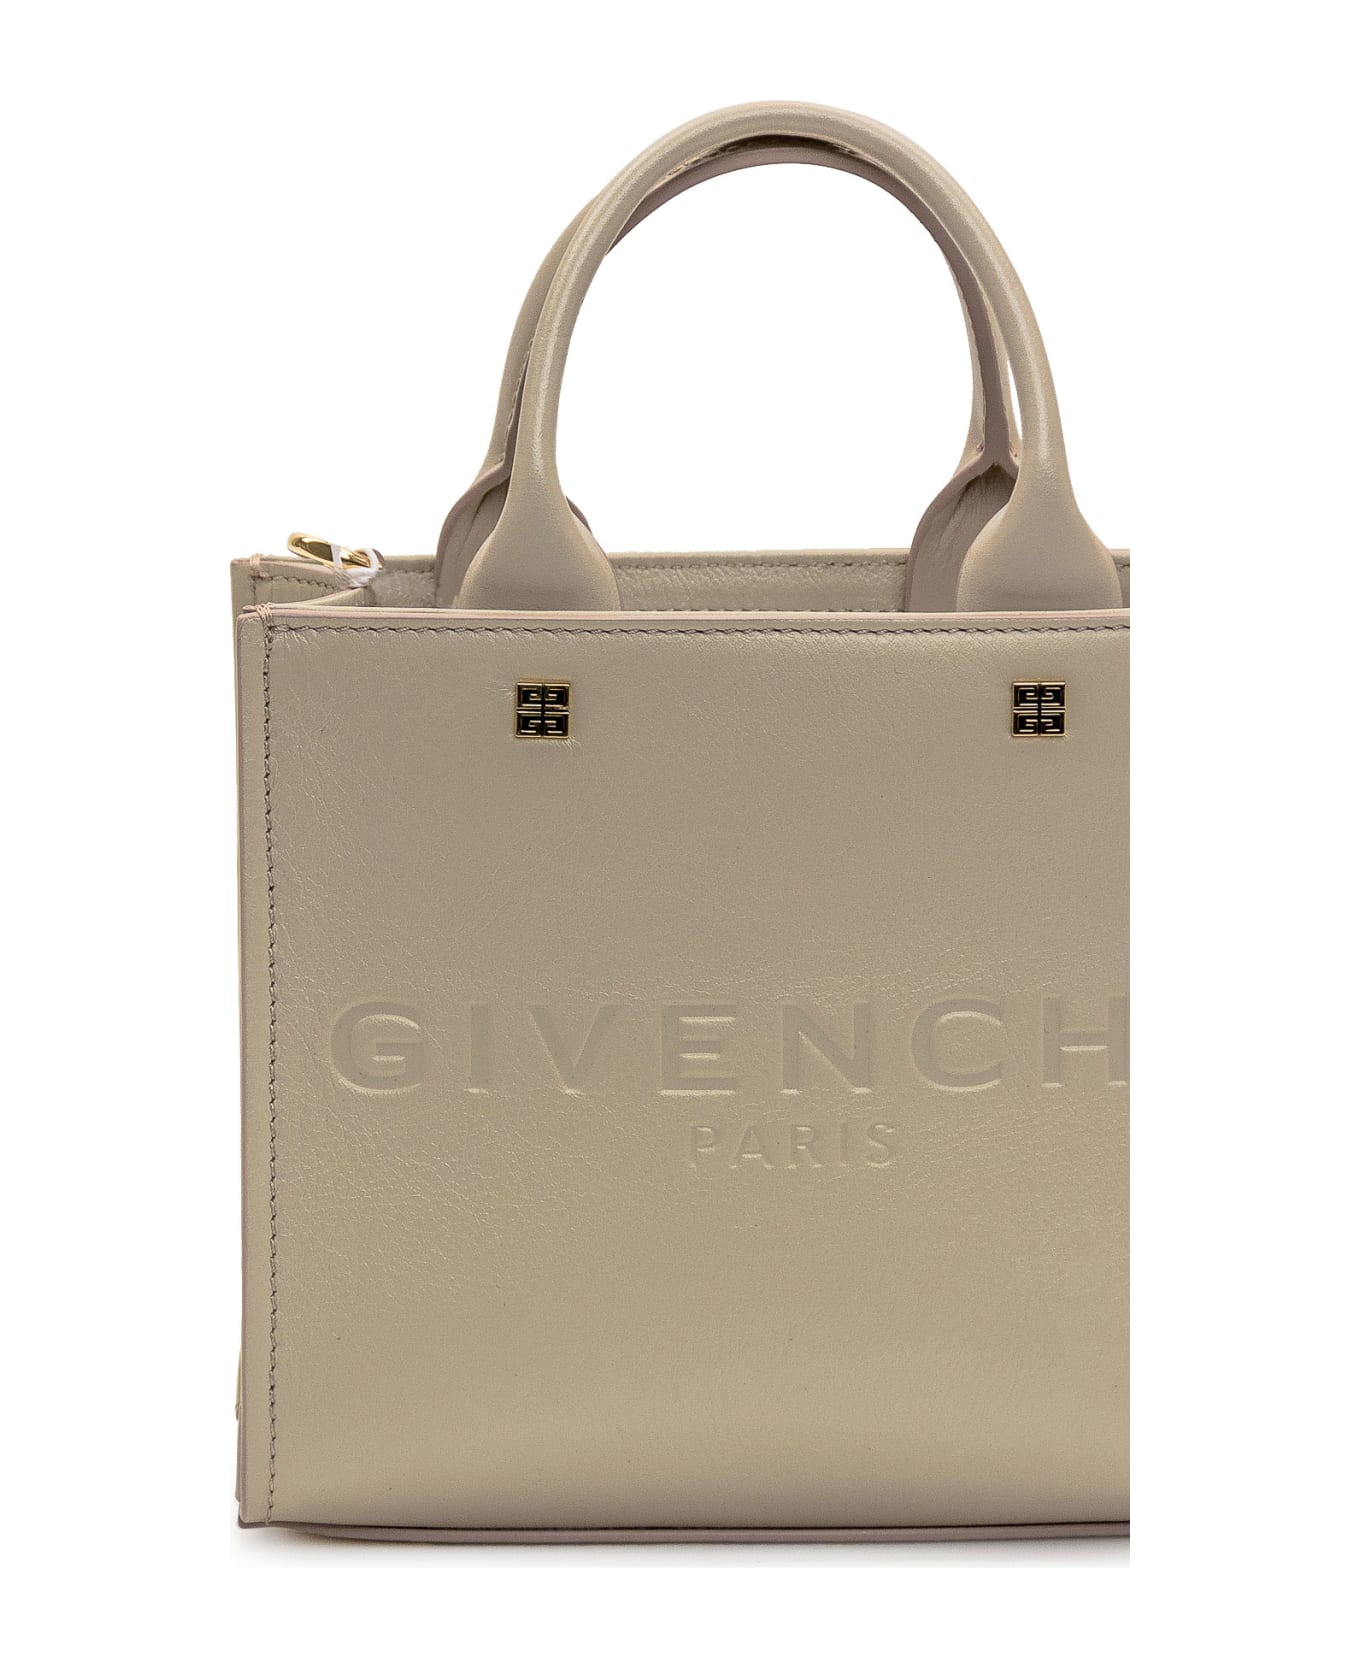 Givenchy G Tote Bag - NATURAL BEIGE